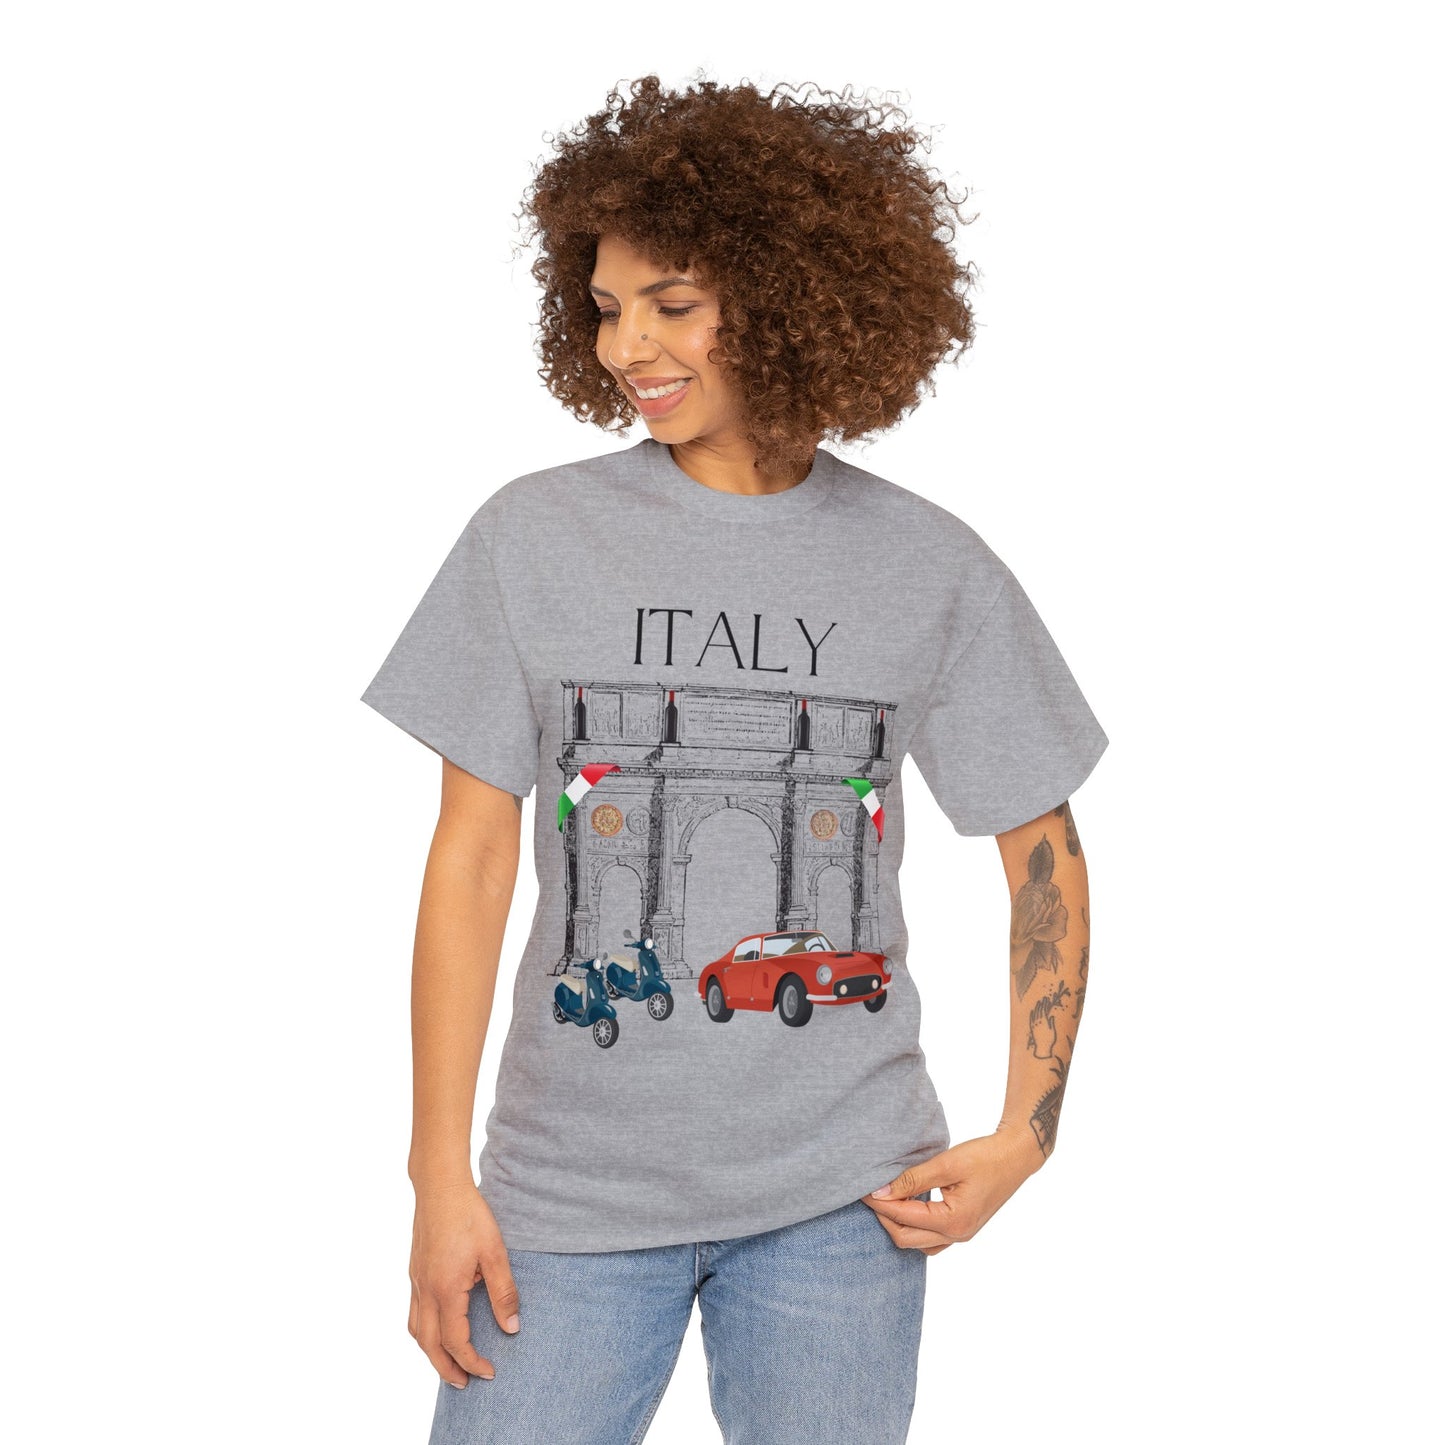 Italy T-Shirt Italian Culture Tee